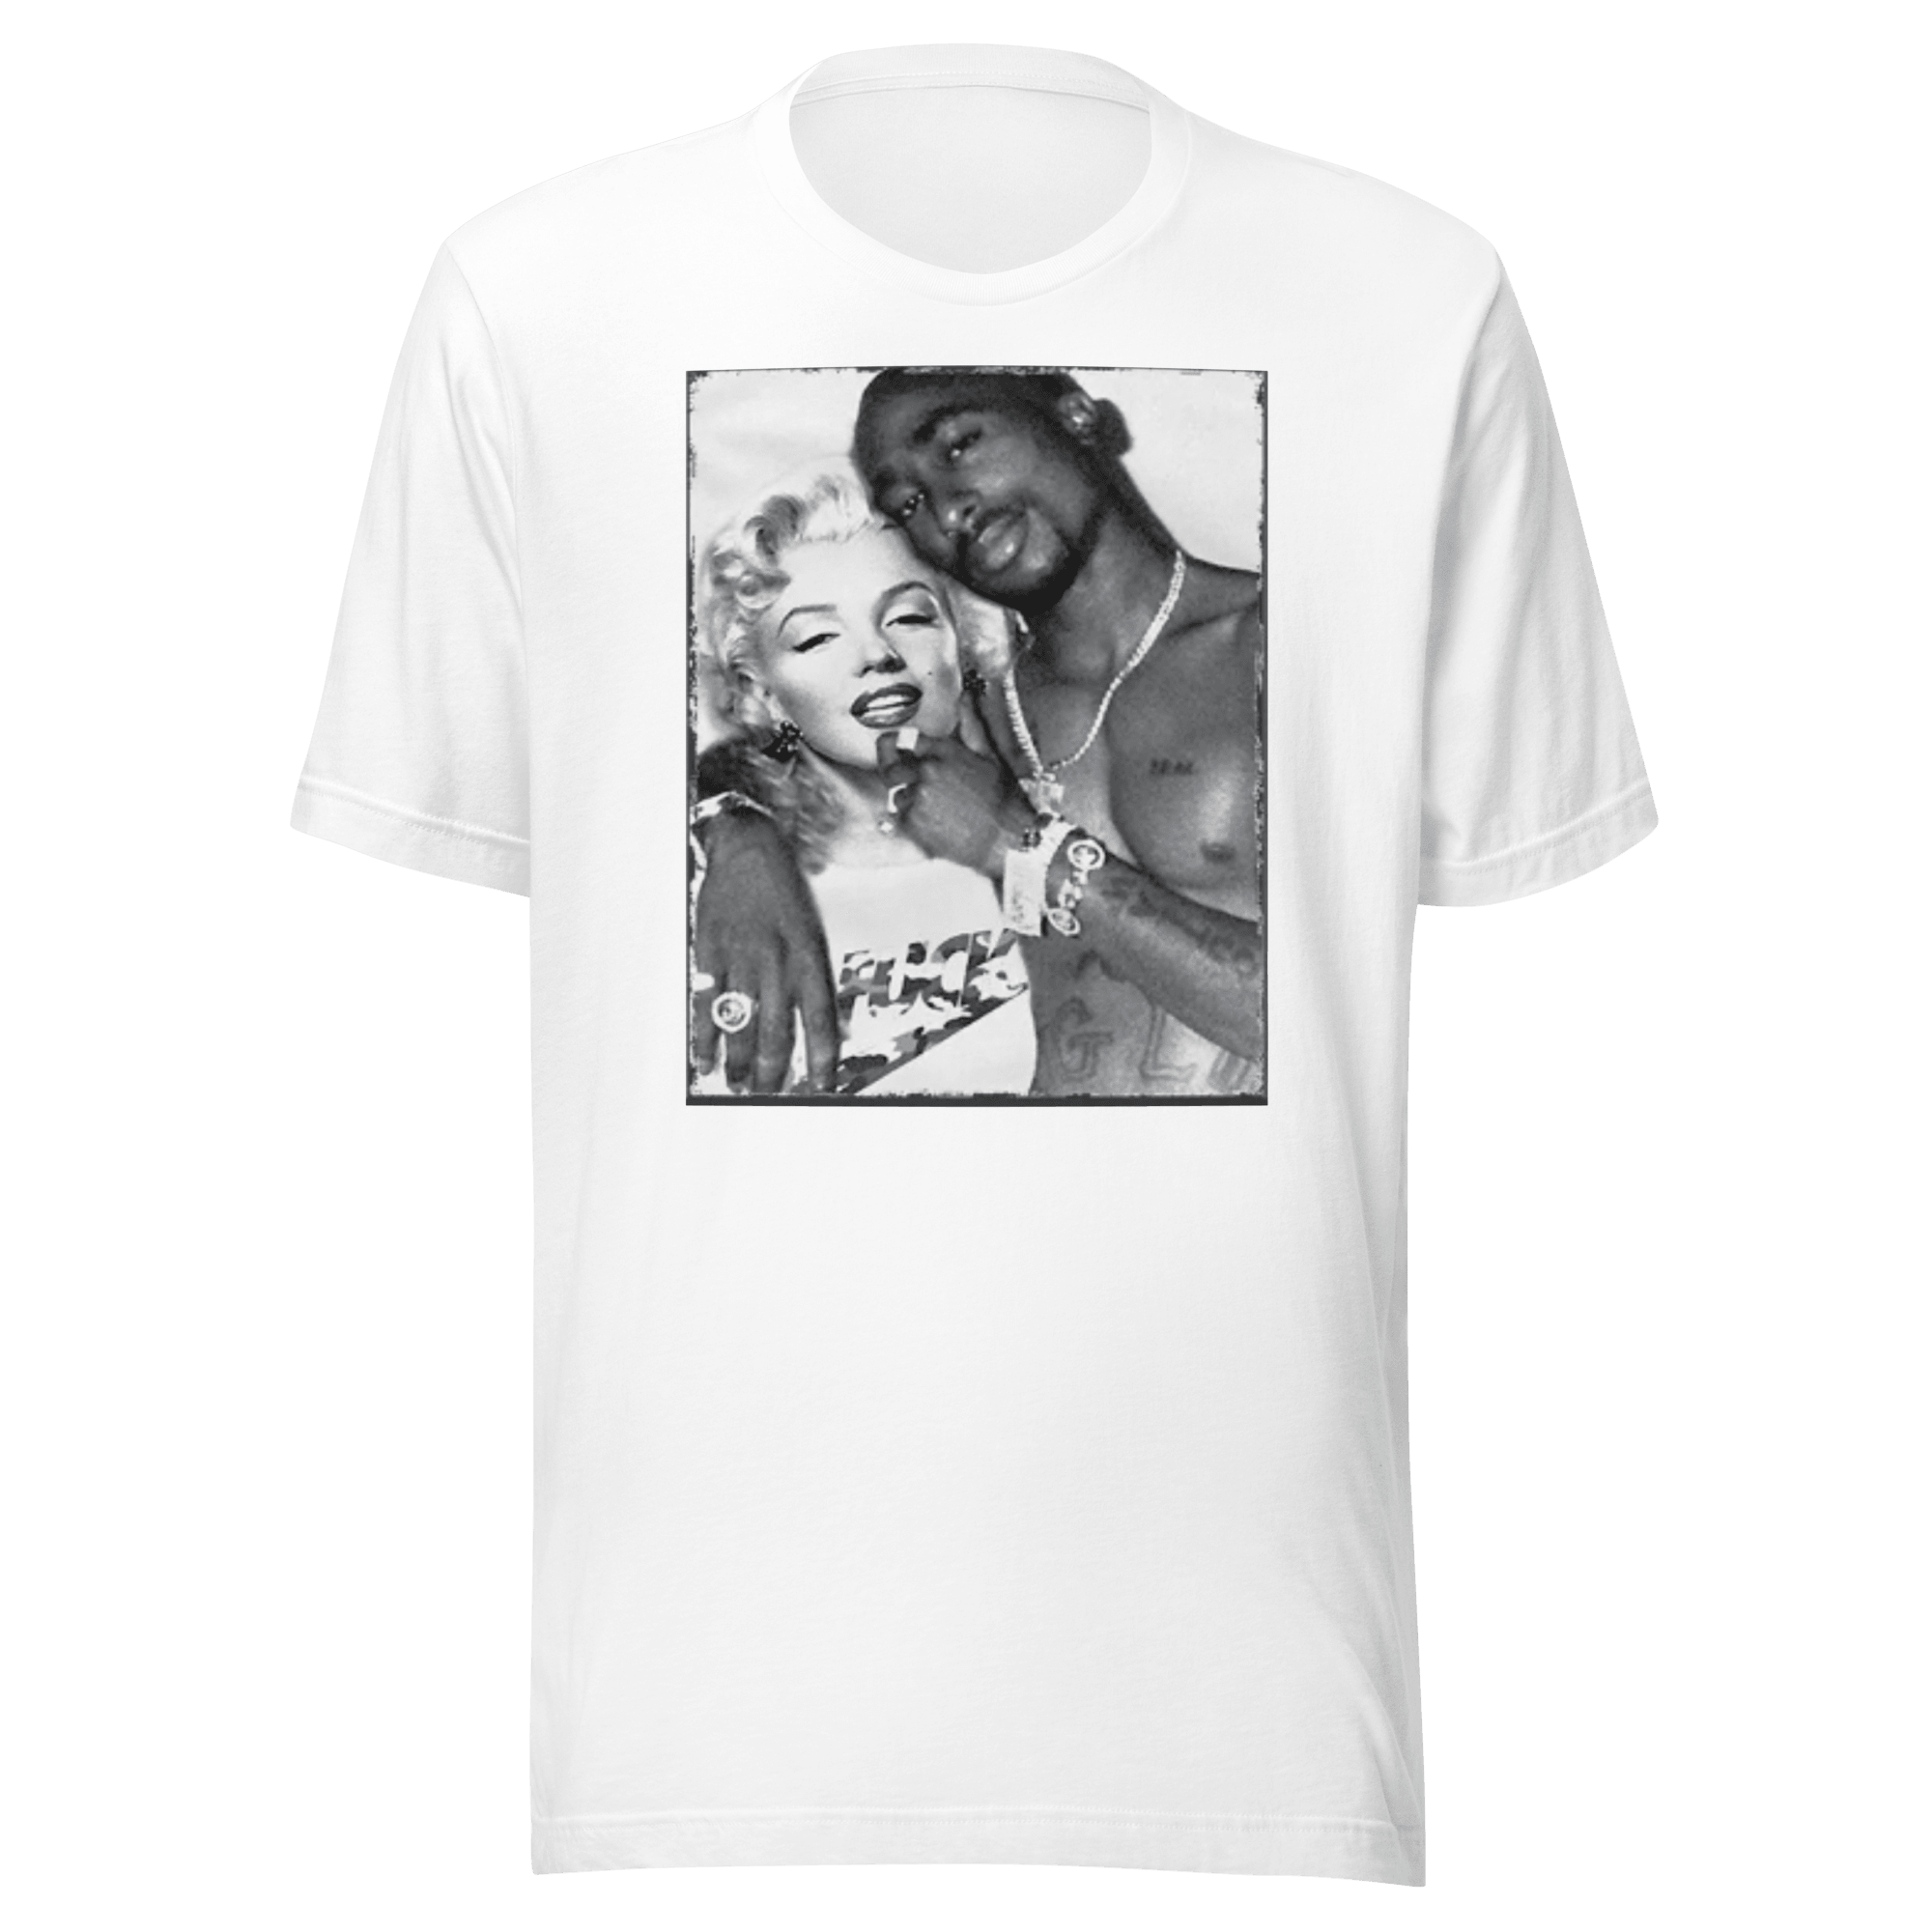 Iconic T-shirt Famous 50's Star Portrait With Decease Rap Artist Short Sleeve Crewneck Ultra Soft Top - TopKoalaTee